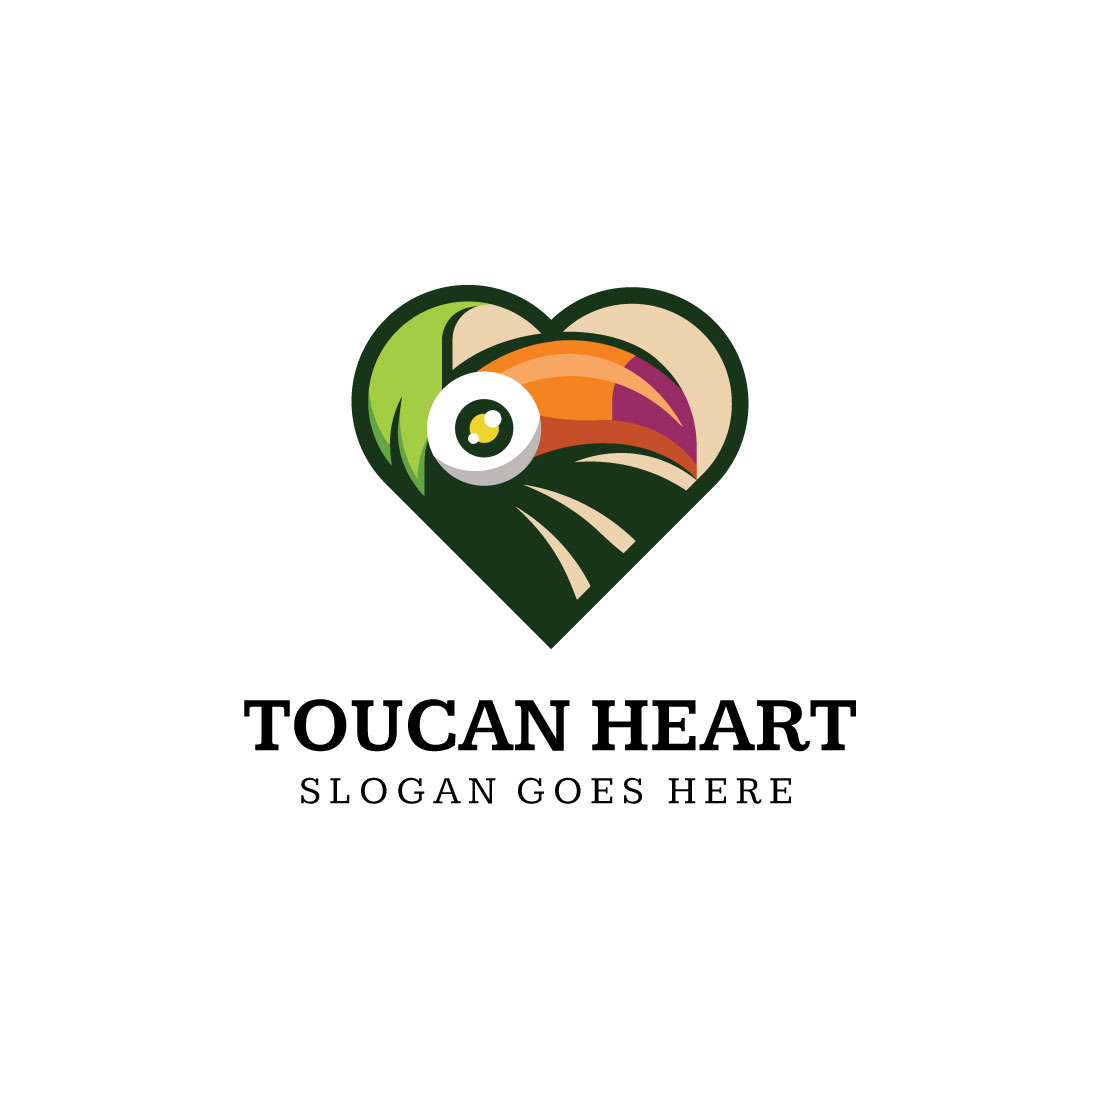 Toucan logo illustration vector flat design preview image.